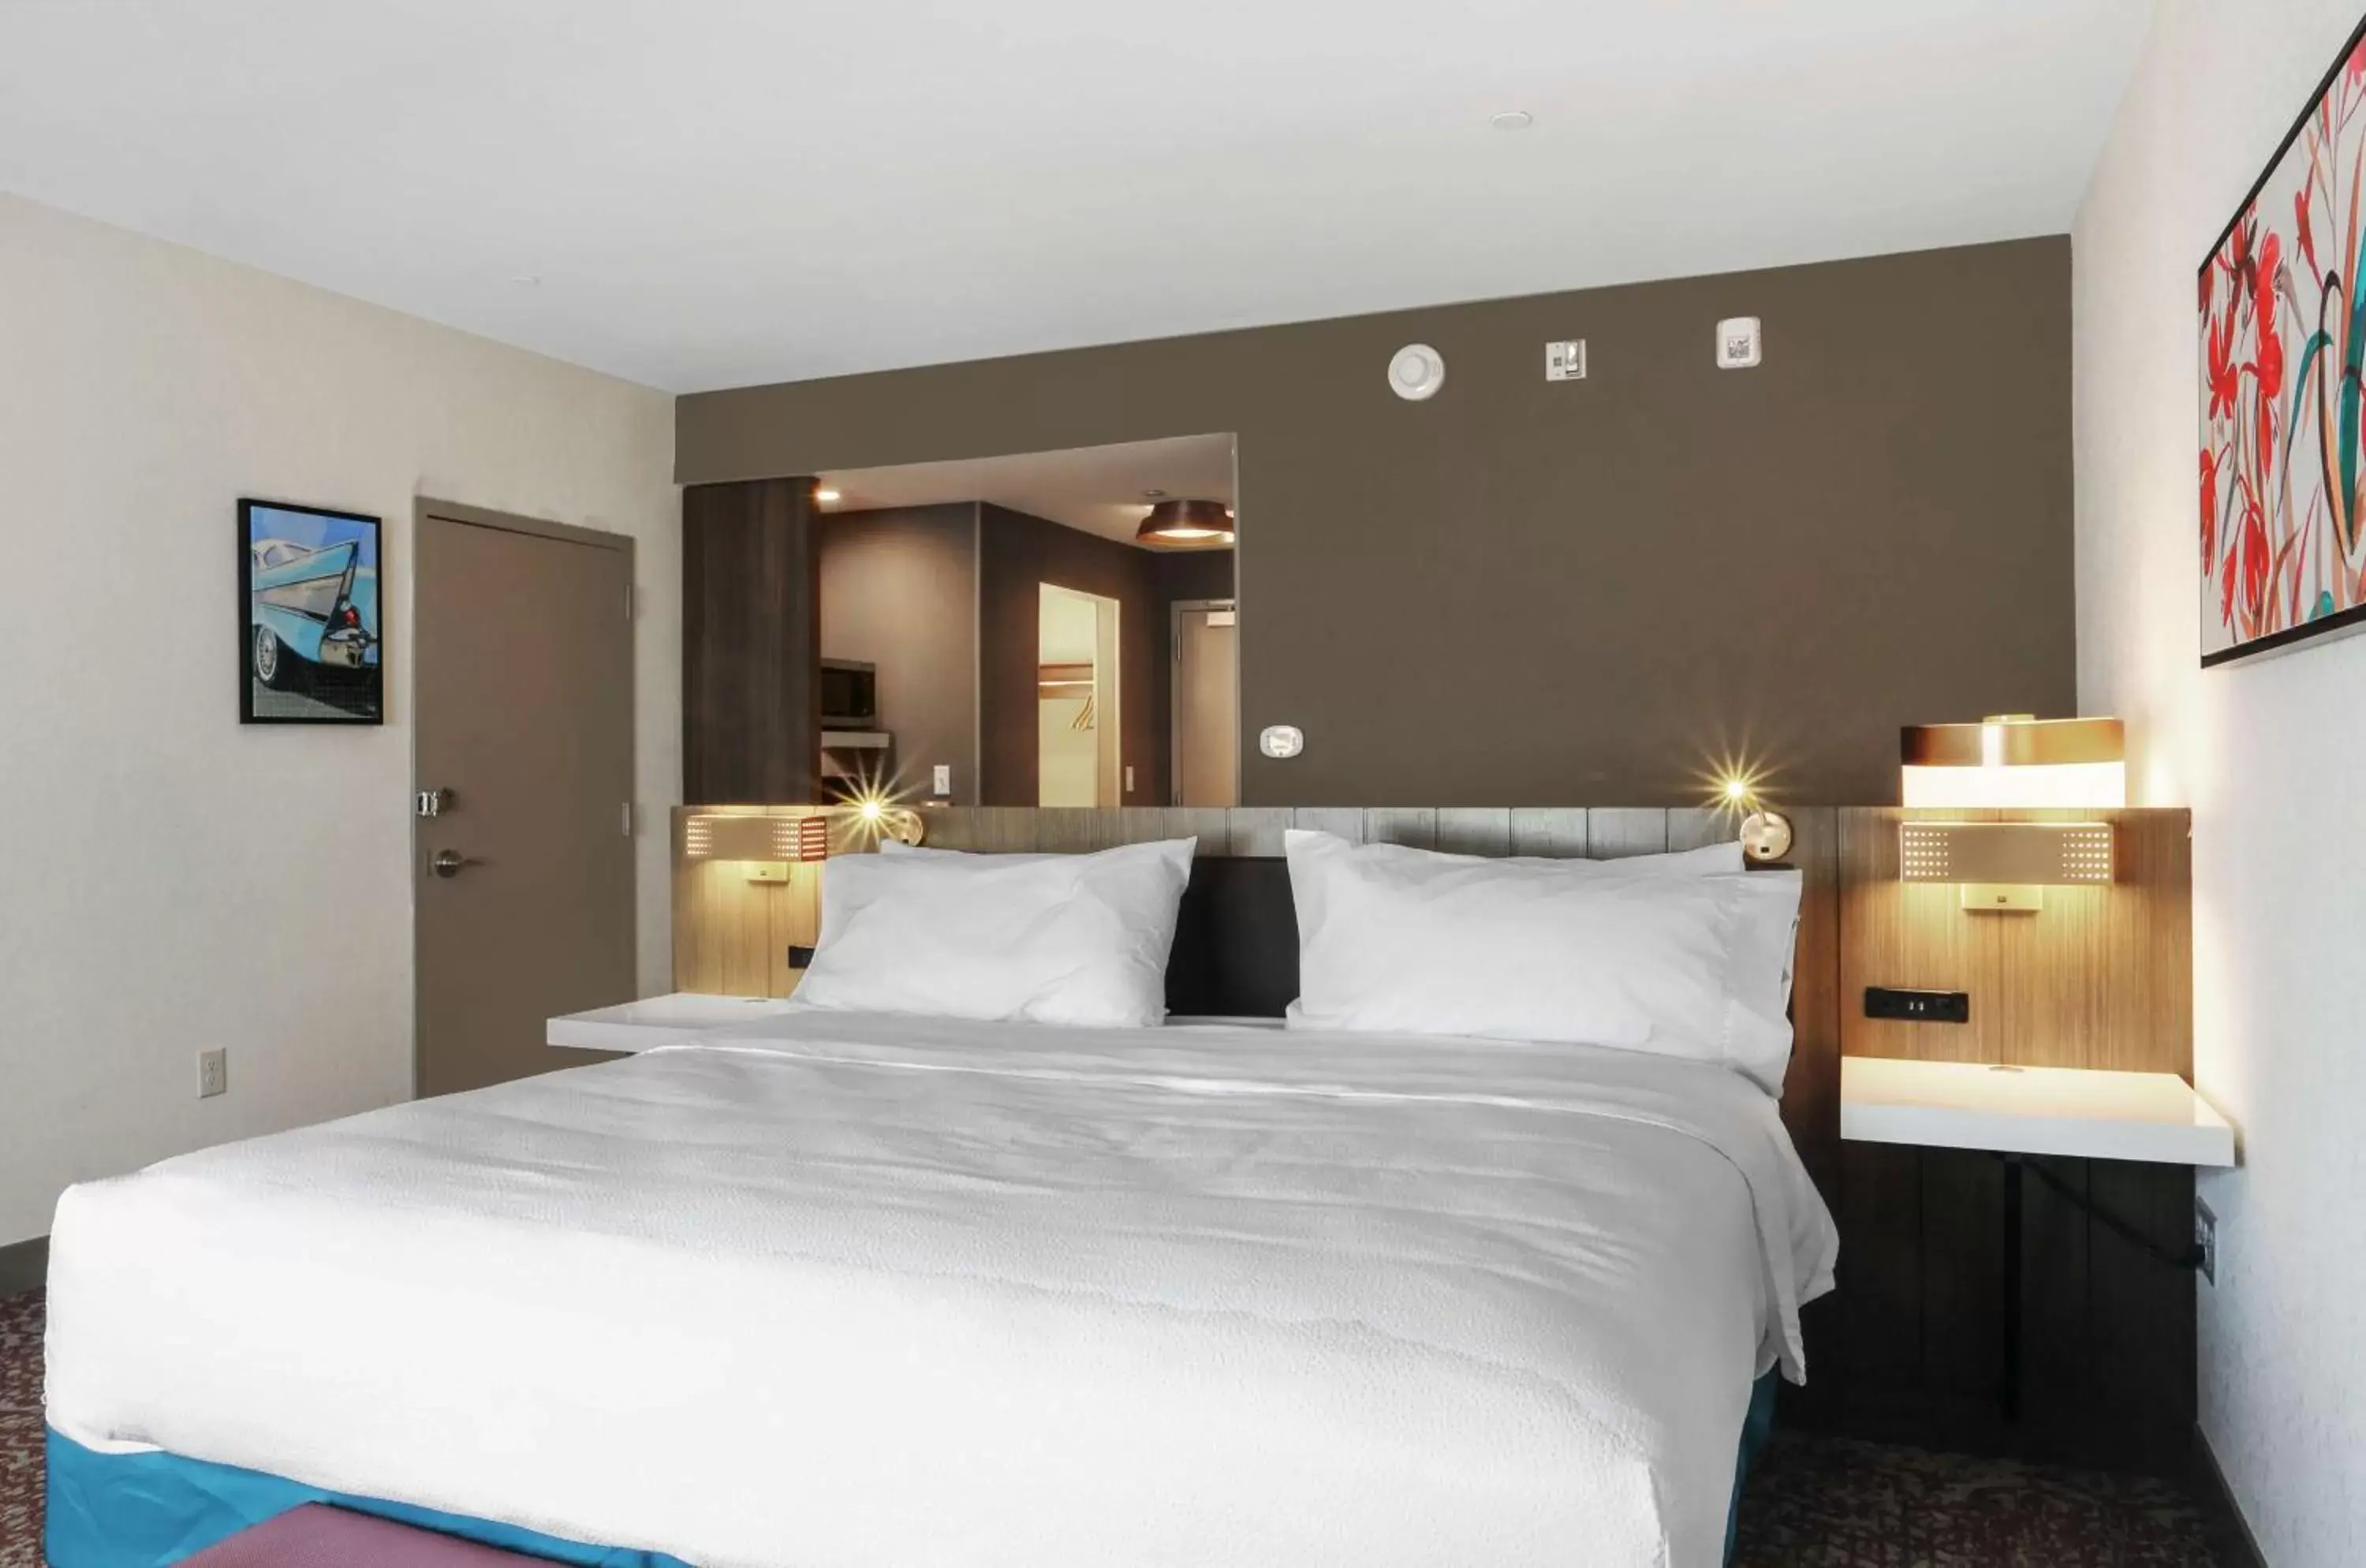 Bed in Hilton Garden Inn Bel Air, Md